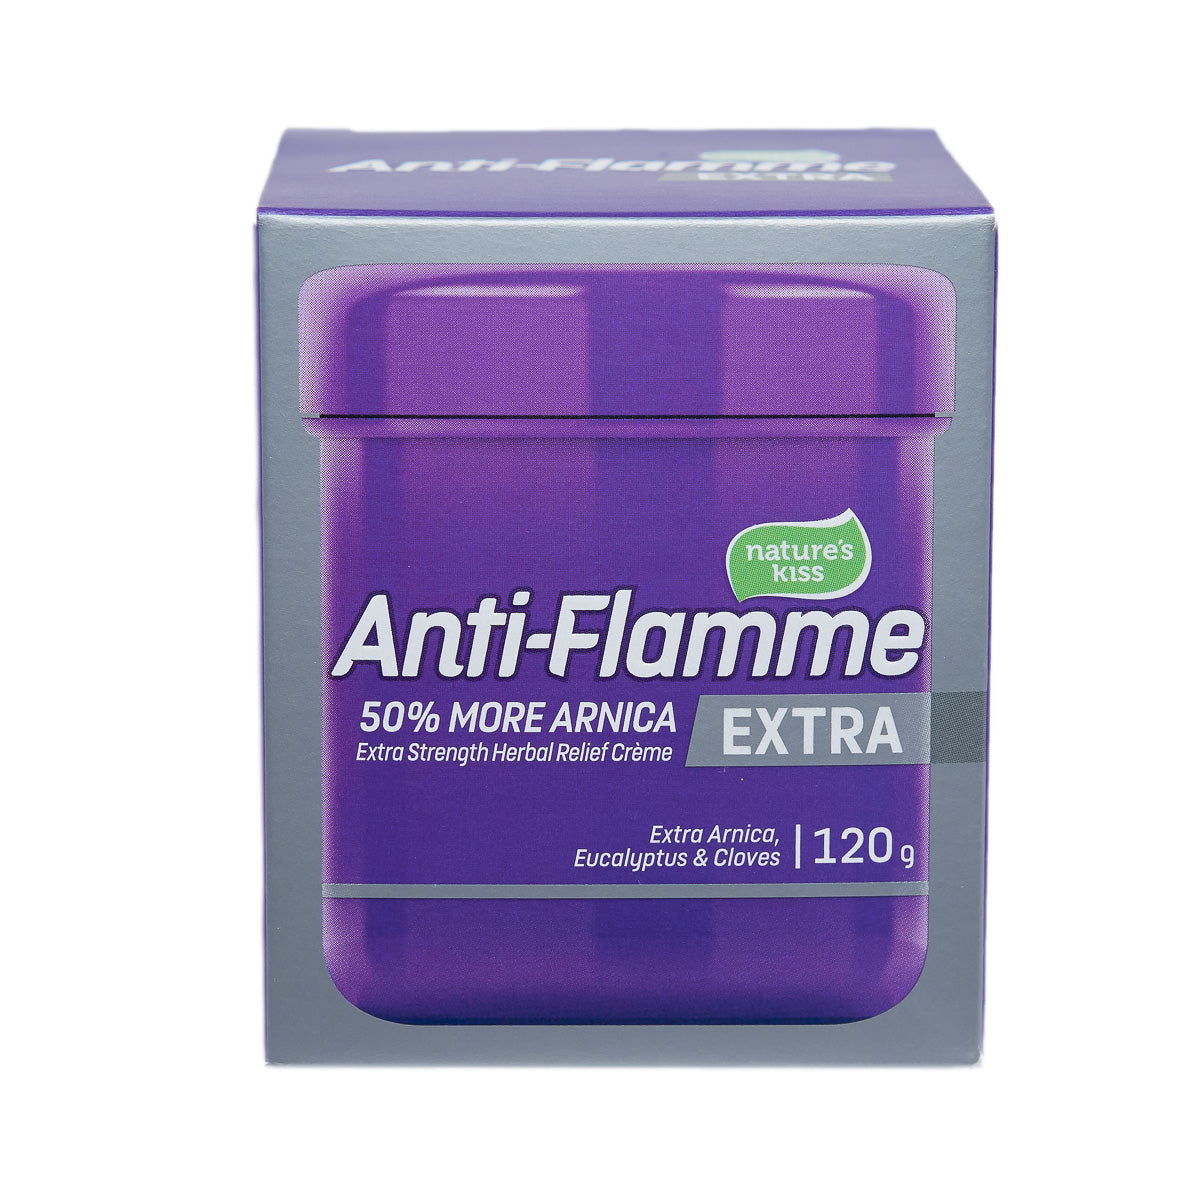 Anti-Flamme Extra 120g